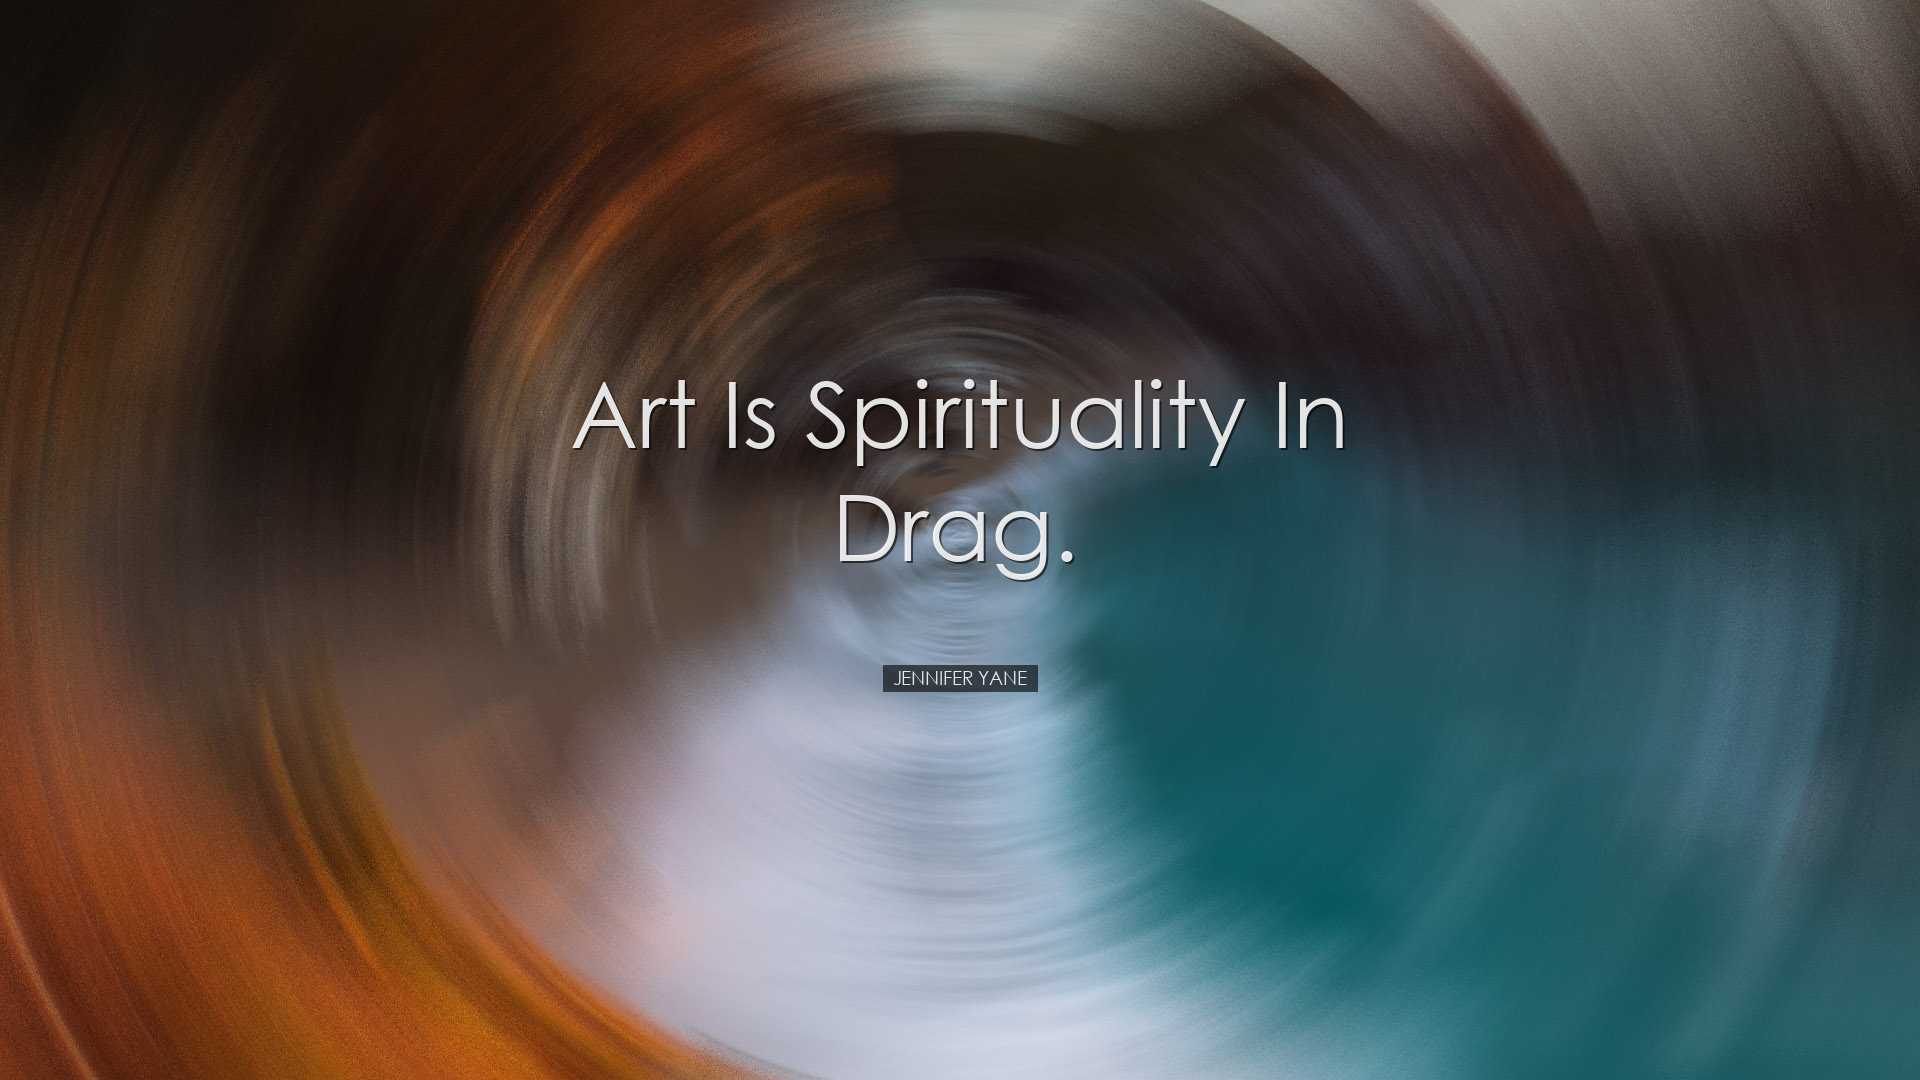 Art is spirituality in drag. - Jennifer Yane